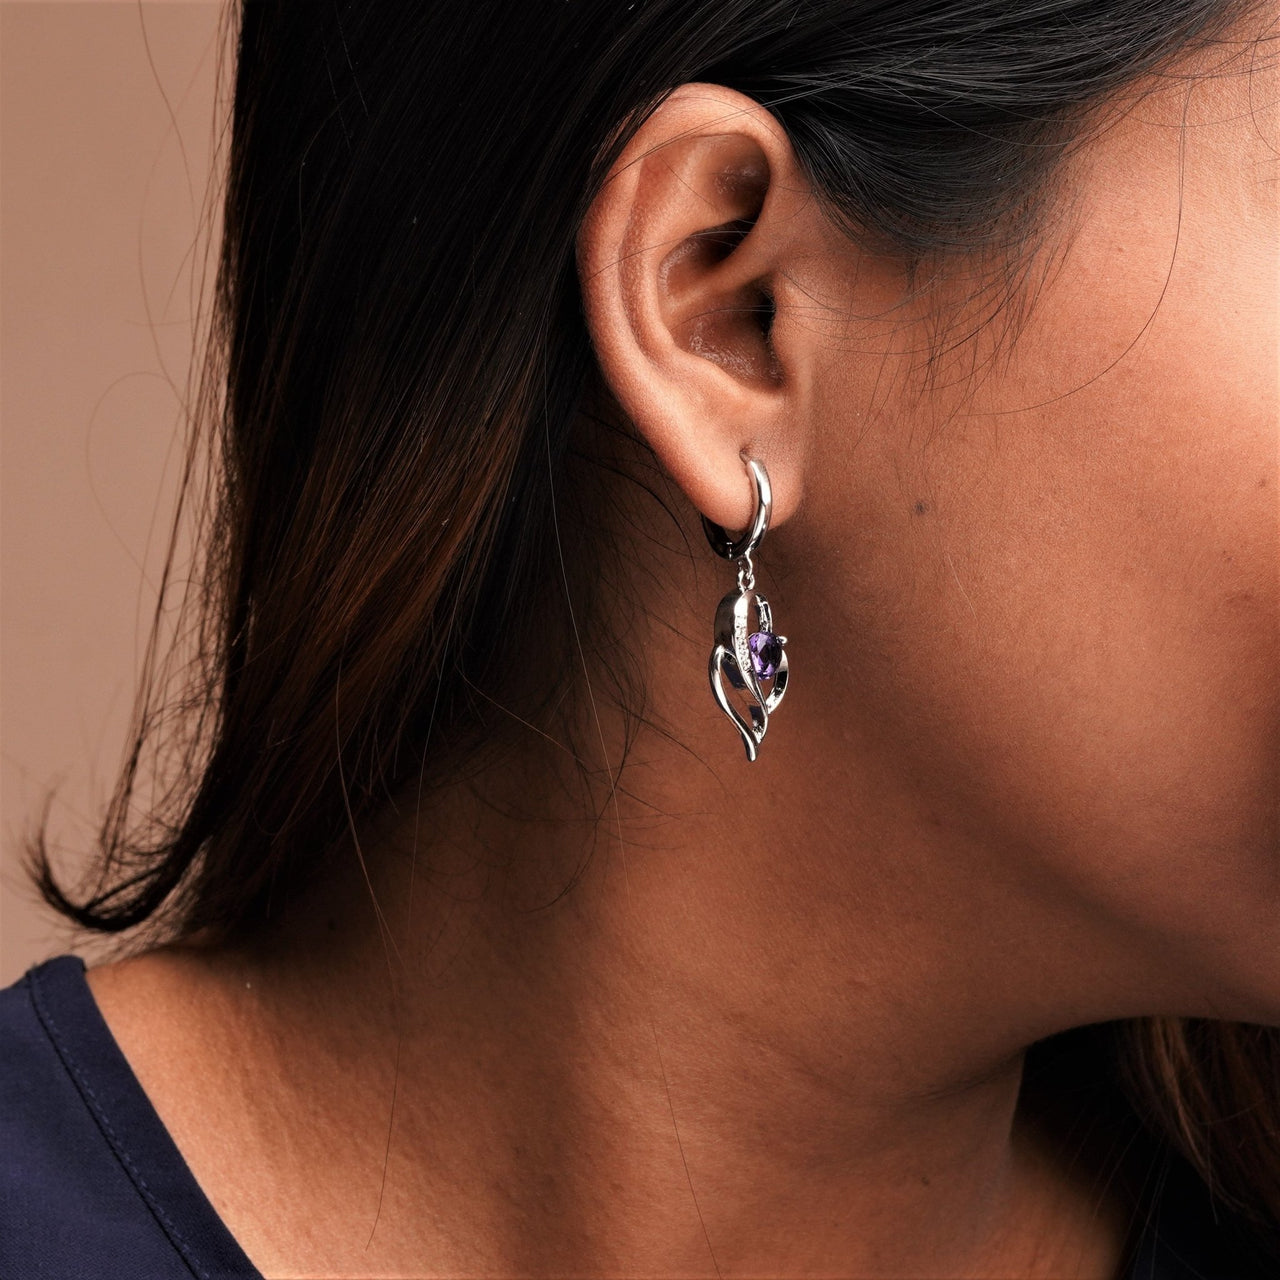 A purple color stone earrings